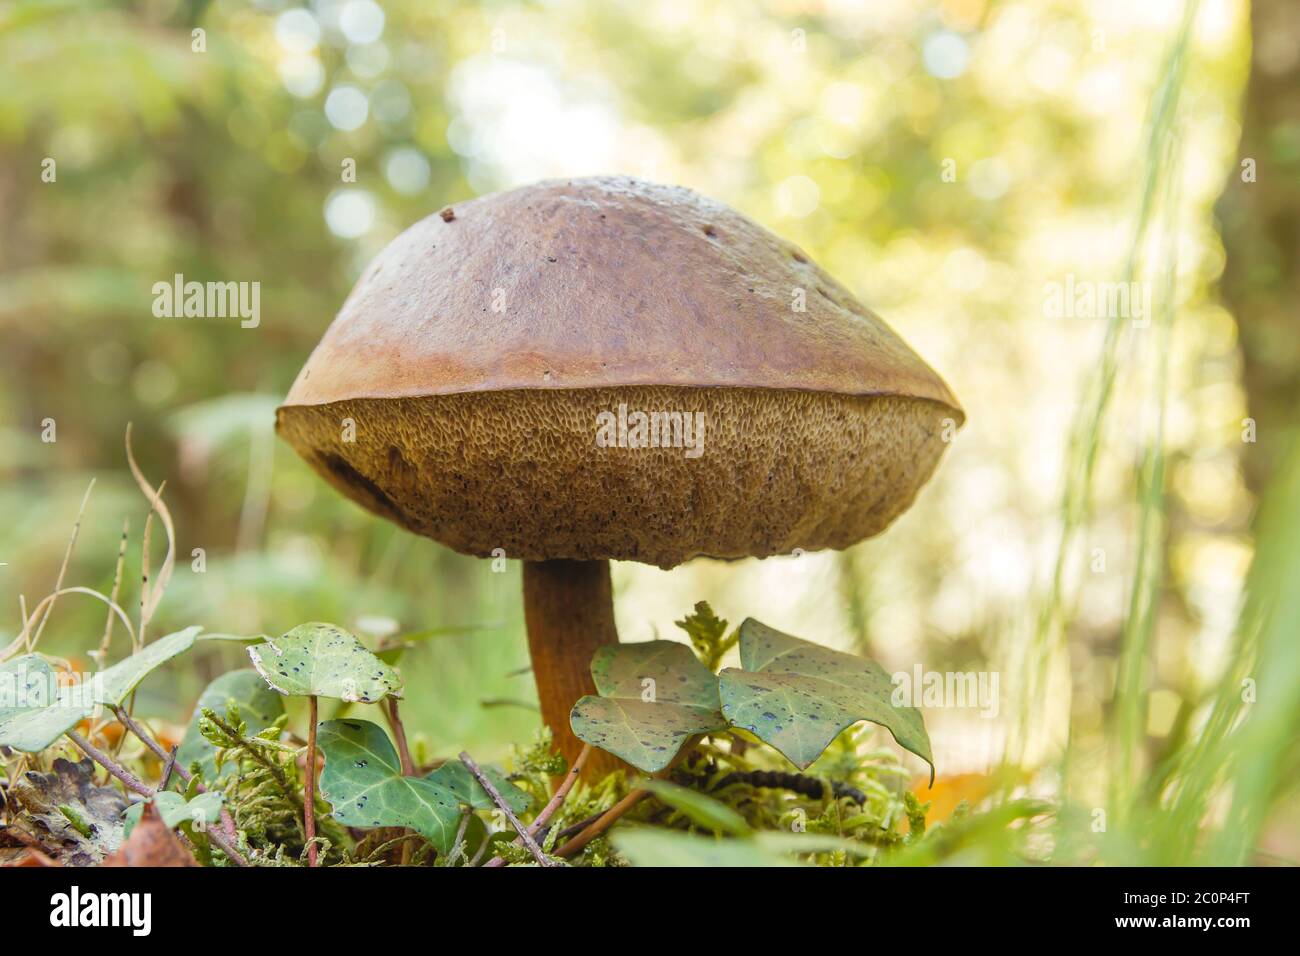 Birch bolete edible mushroom growing wild in the forest Stock Photo